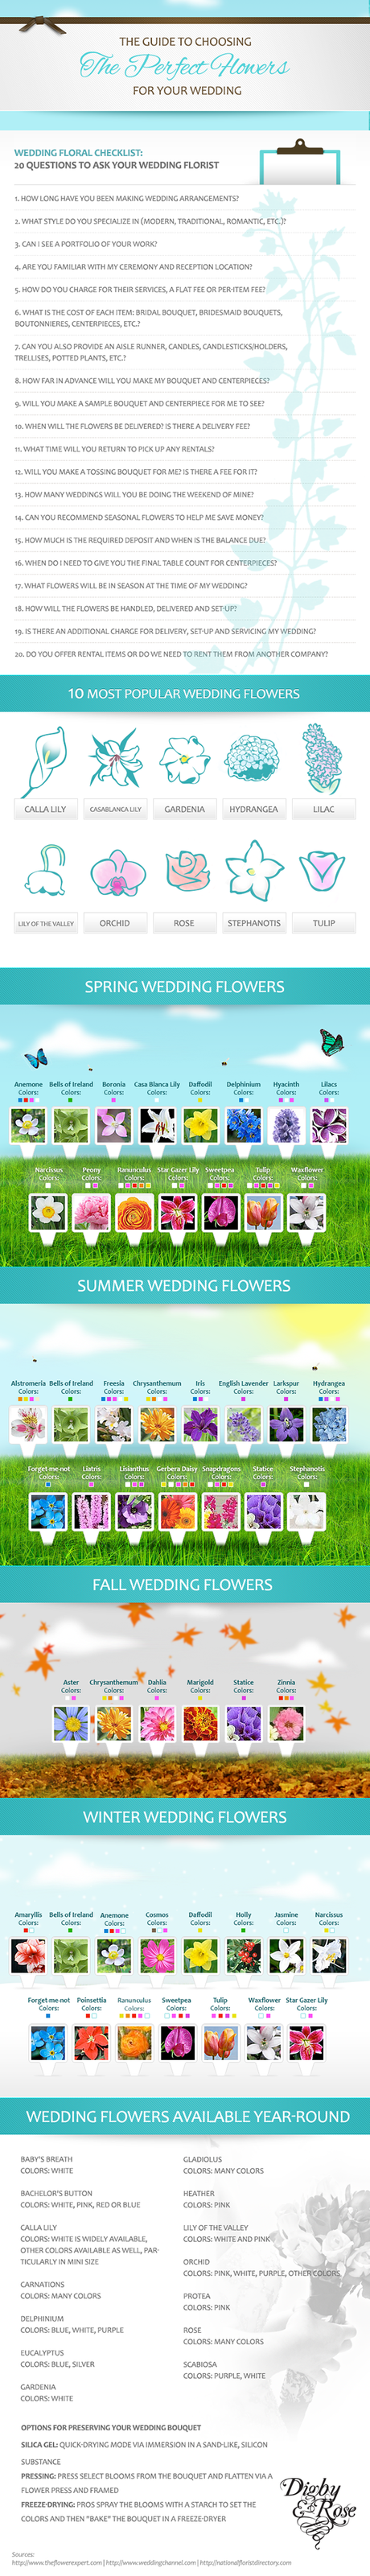 guide-wedding-flowers-lp